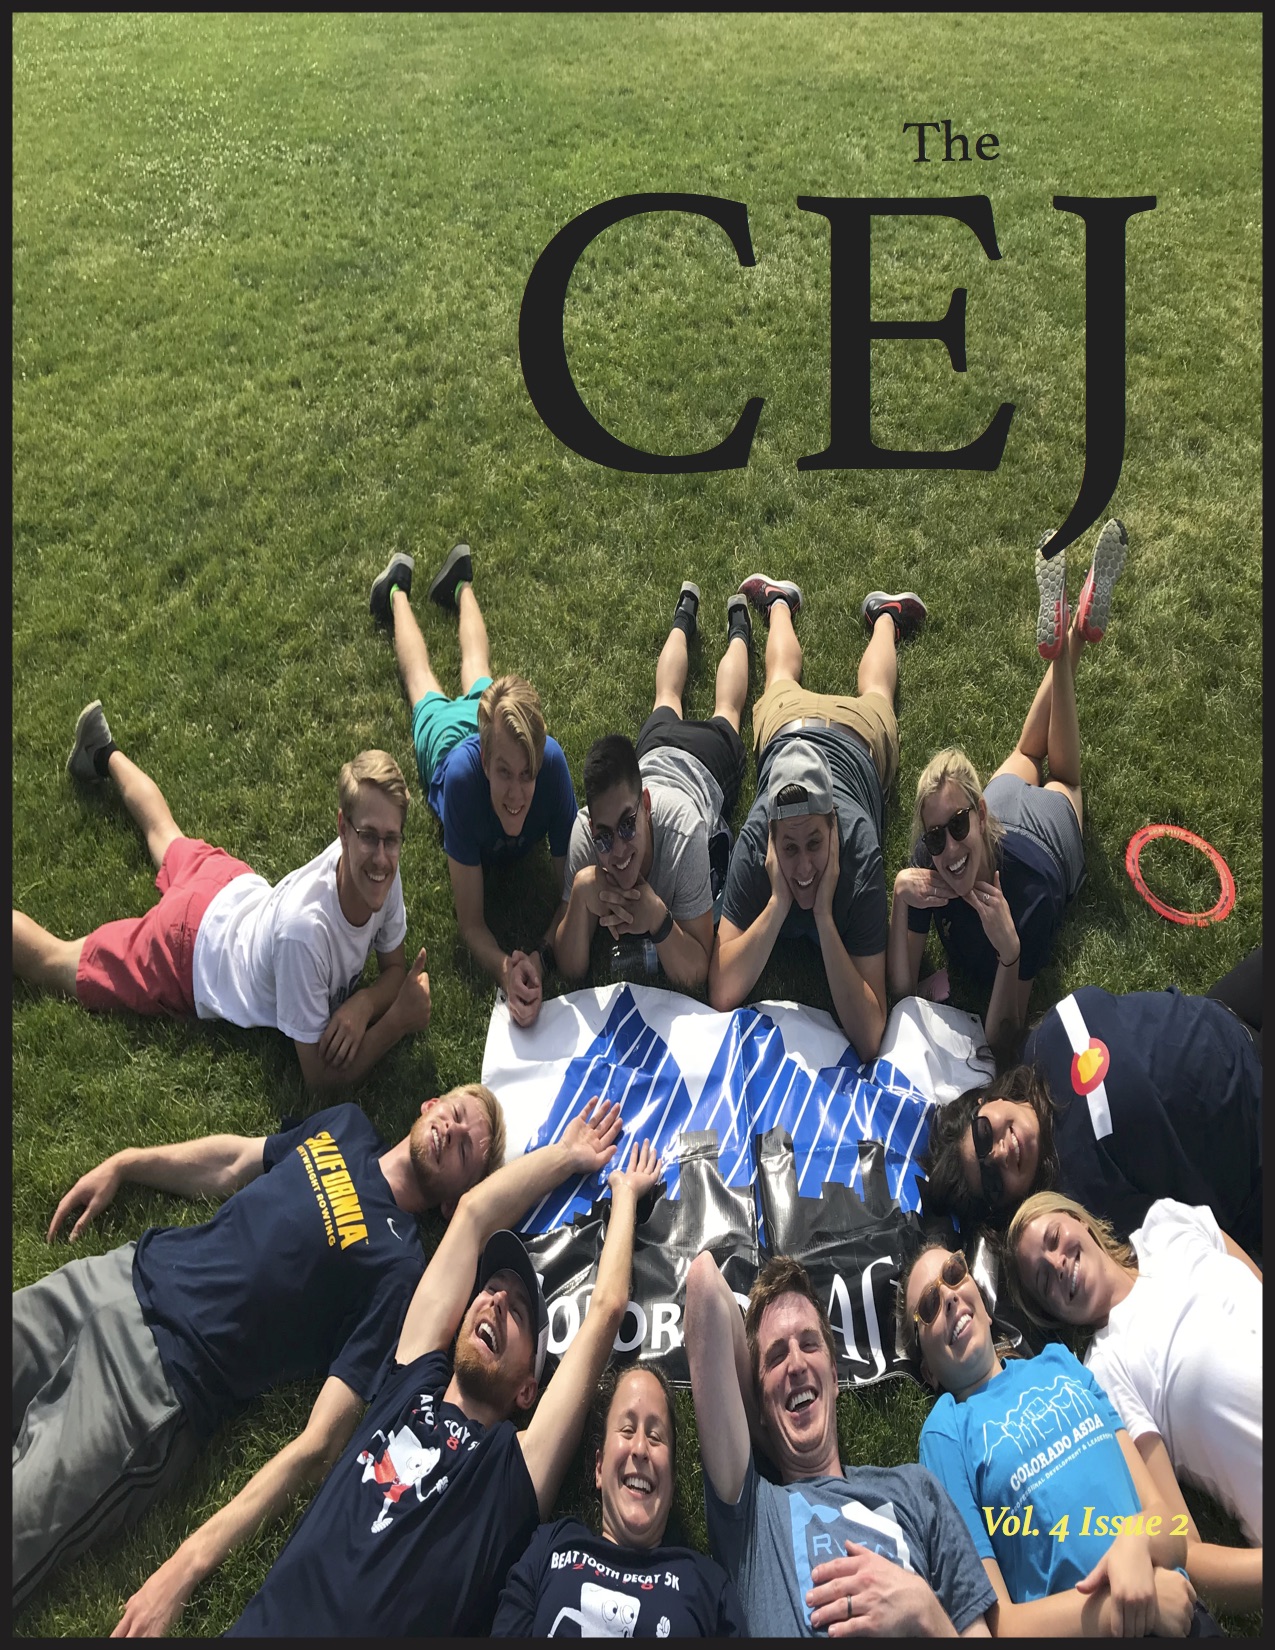 The CEJ (Vol 4 issue 2)